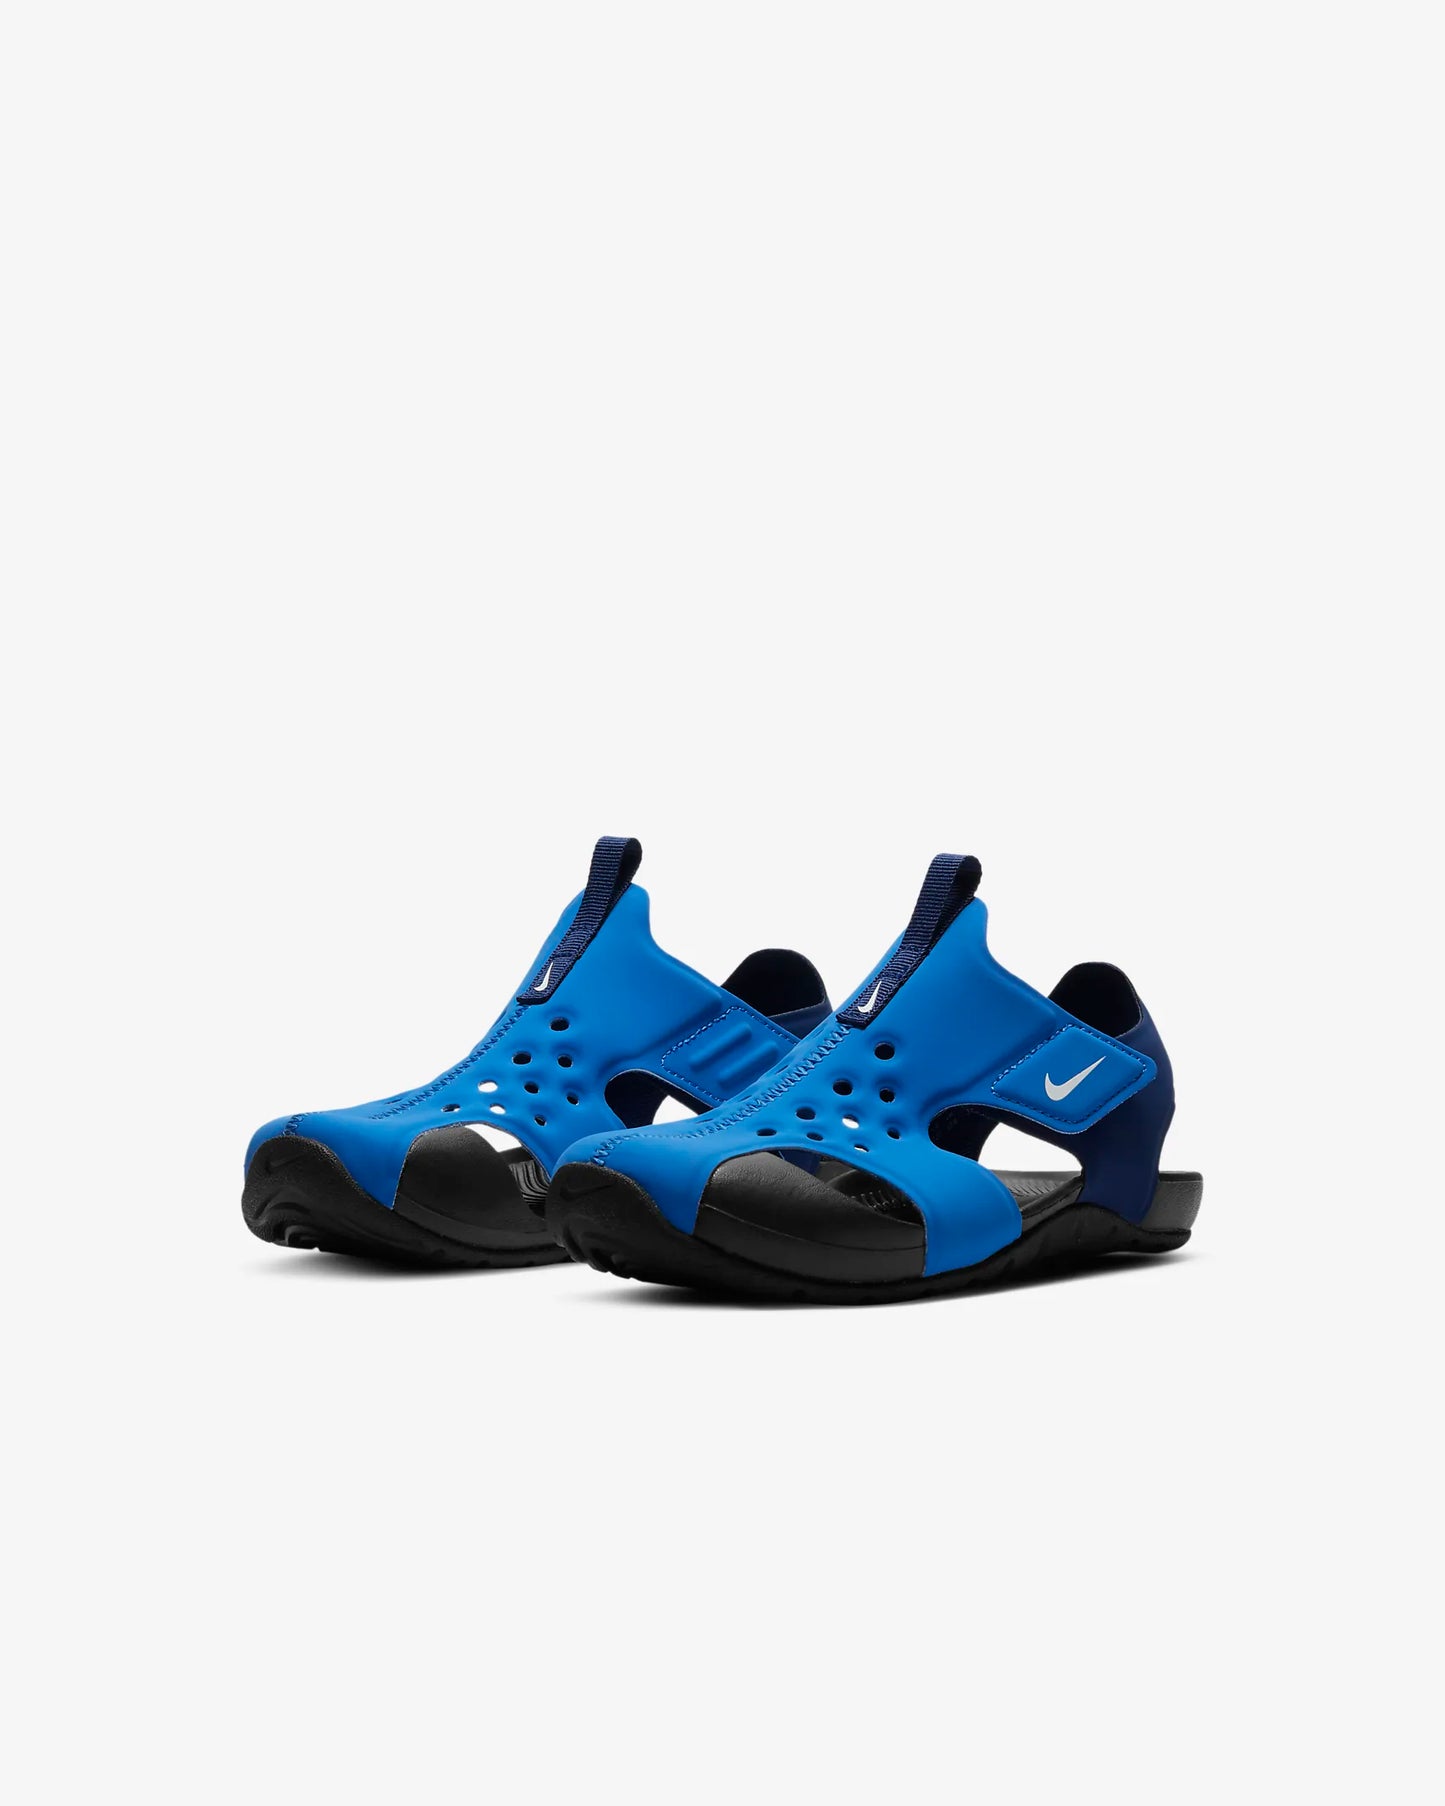 - Nike Kids Sunray Protect 2 BLUE - (943826-403) - SUN - R1L9